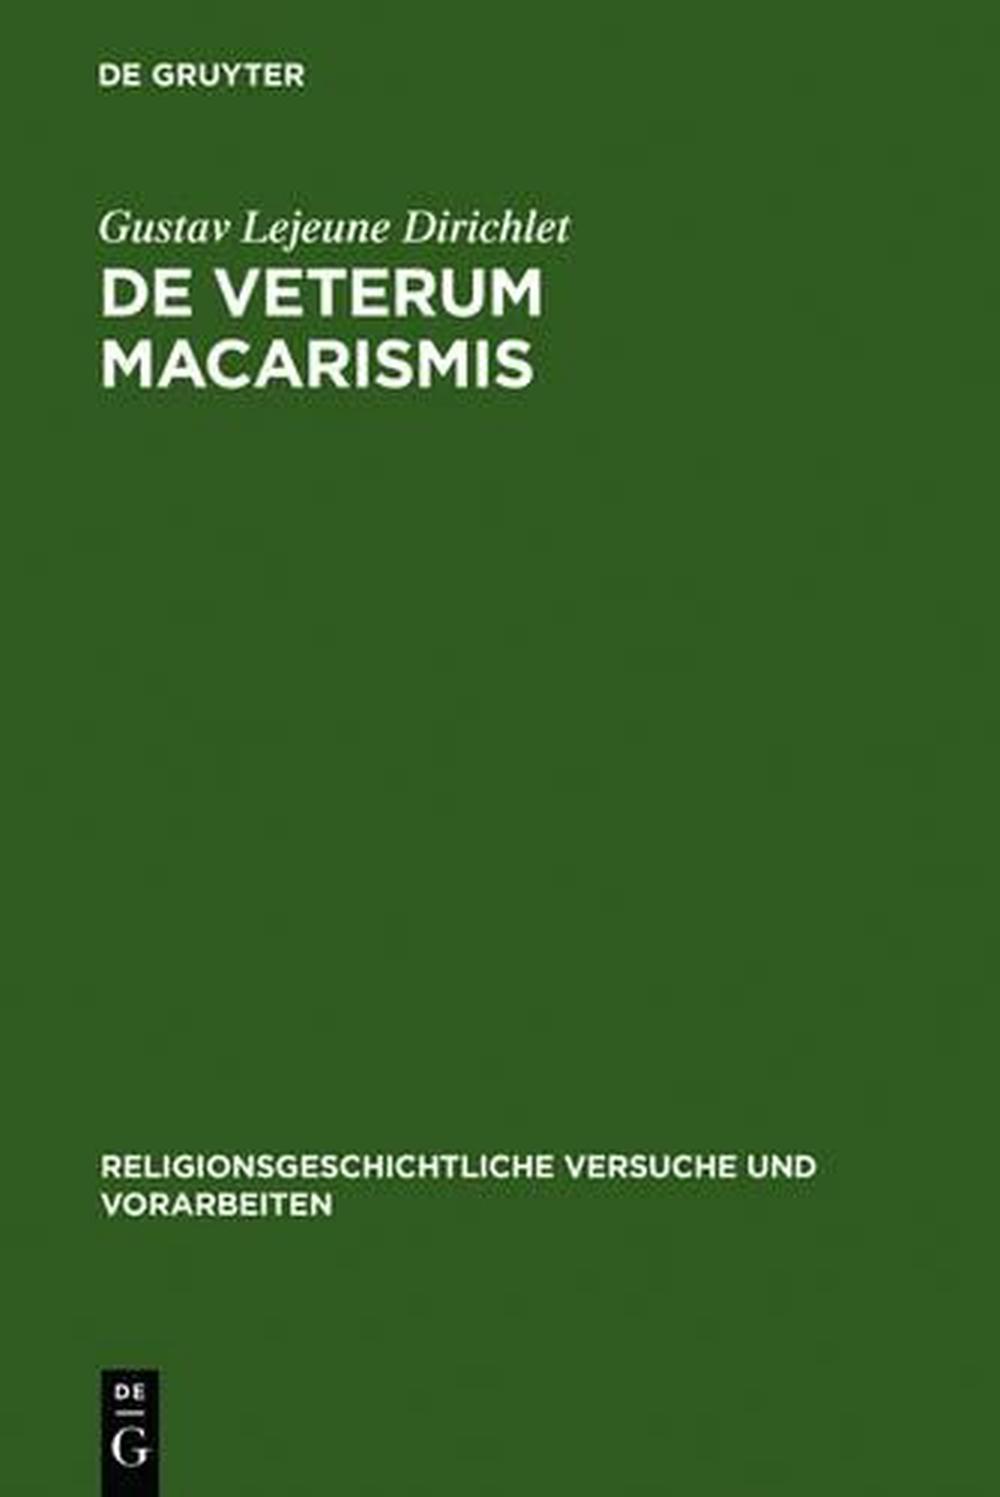 De veterum macarismis von Gustav Lejeune Dirichlet (lateinisch) Hardcover-Buch - Gustav Lejeune Dirichlet